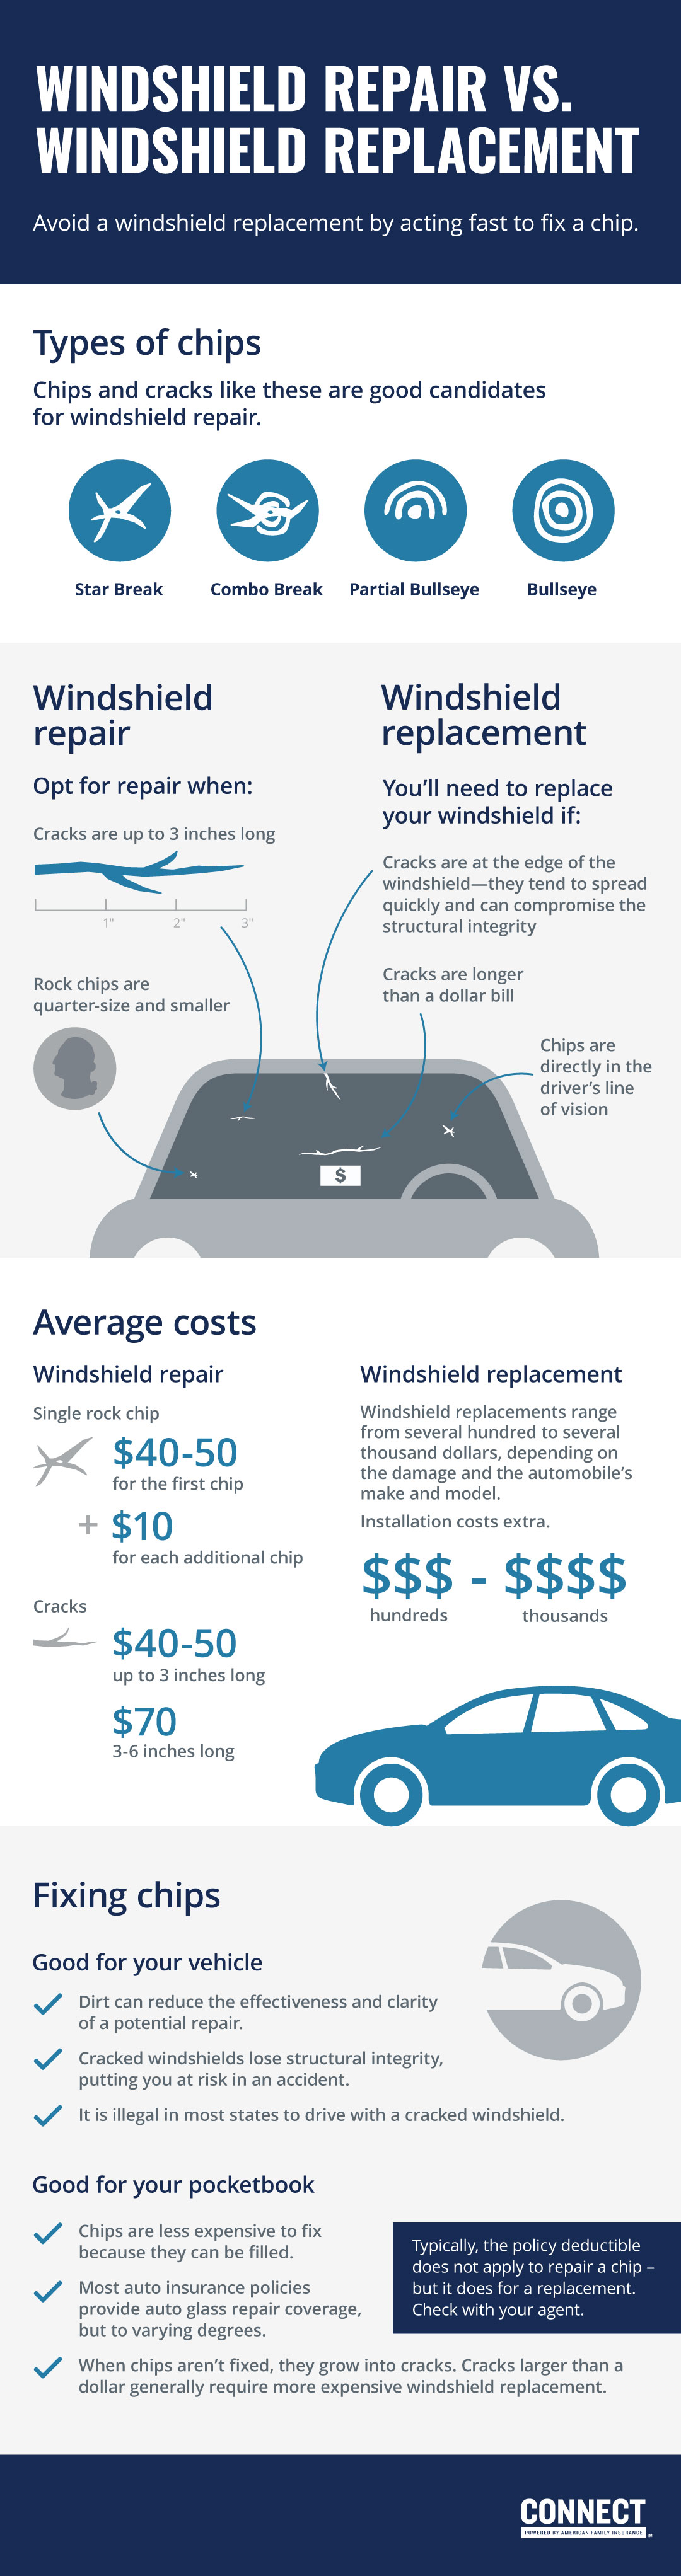 cheapest car insurance perks liability insurance company